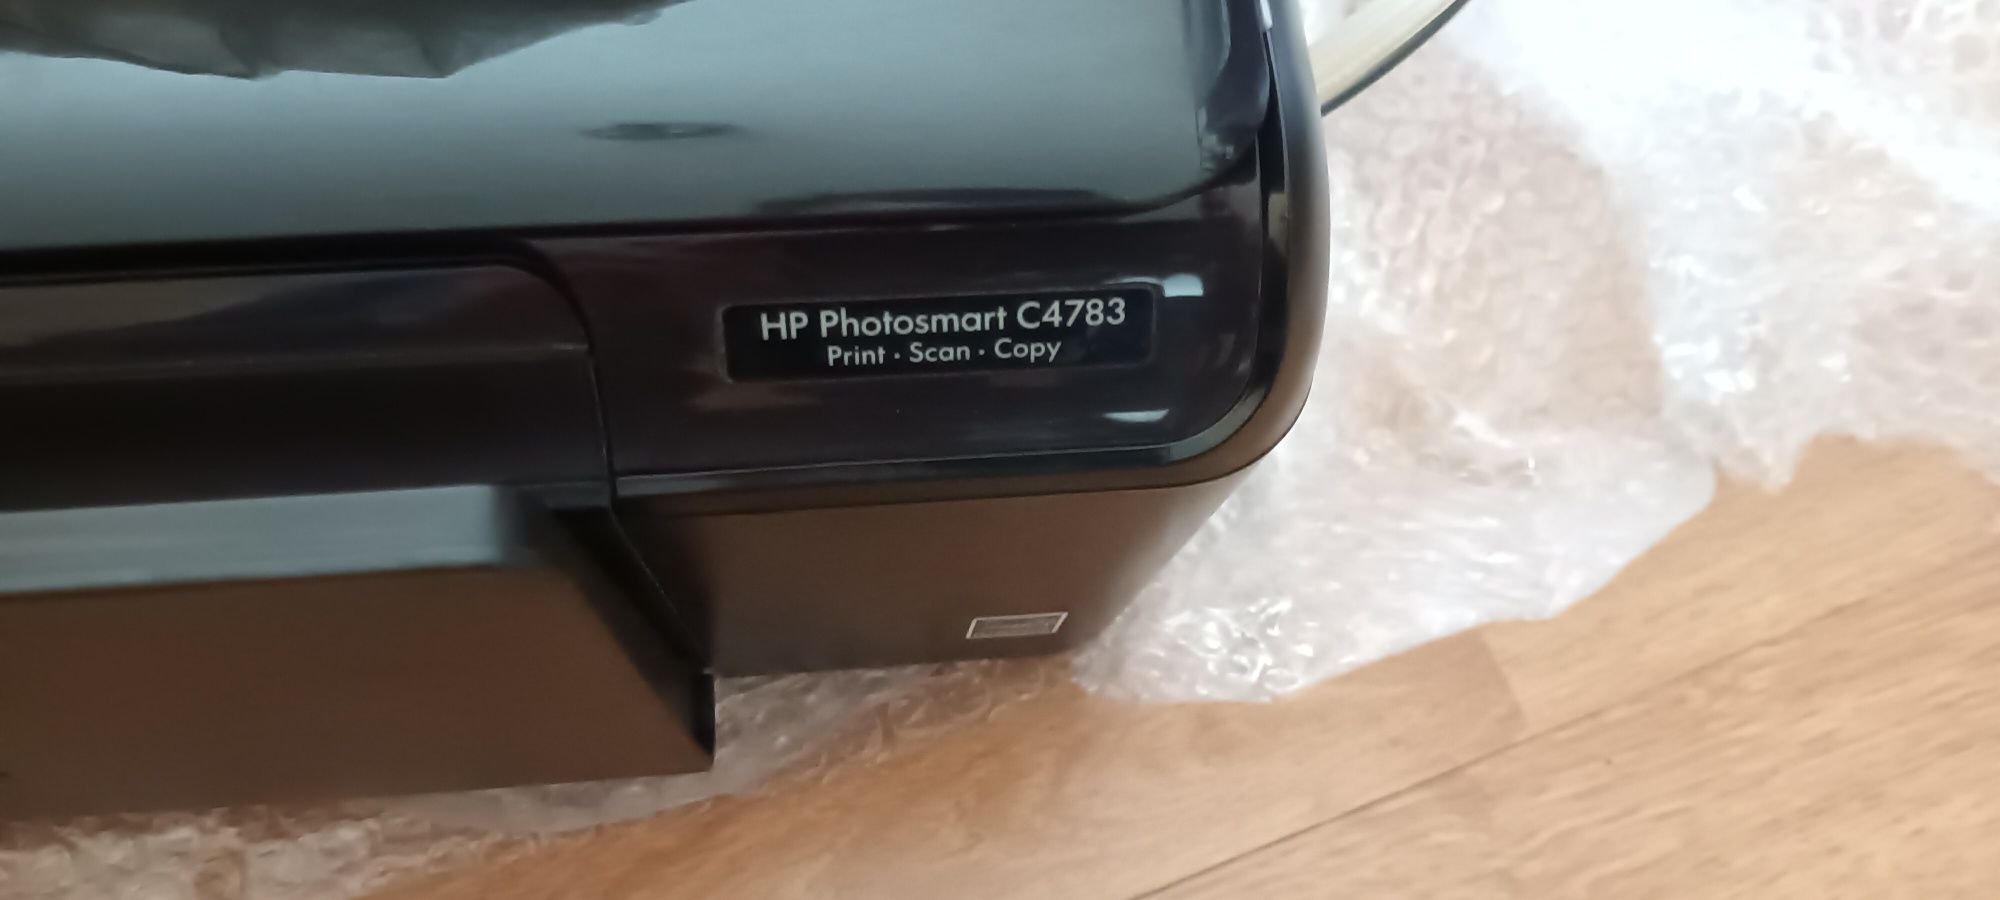 Принтер кольоровий HP Photosmsrt c4783